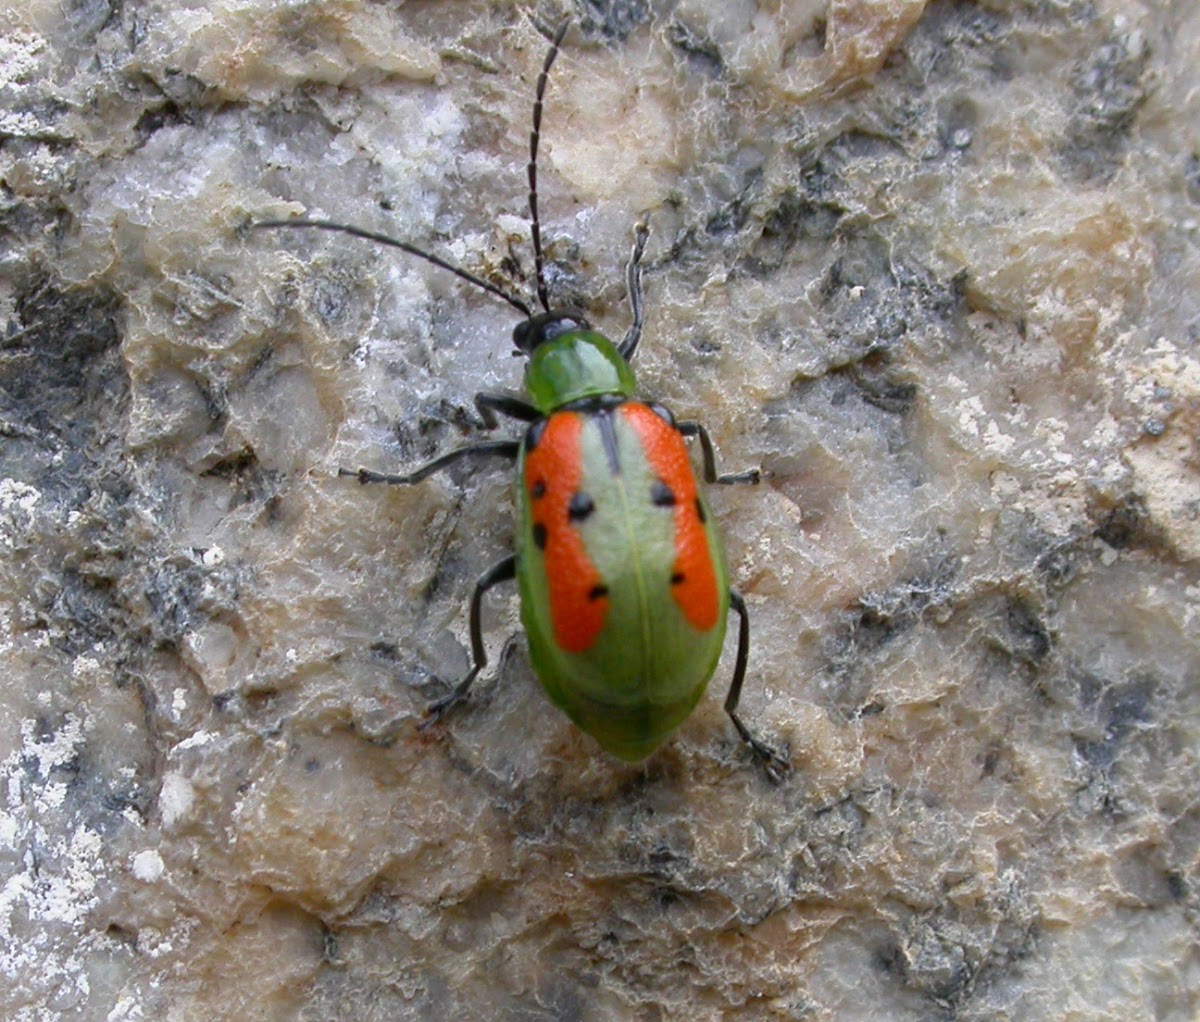 Green and orange leaf beetle